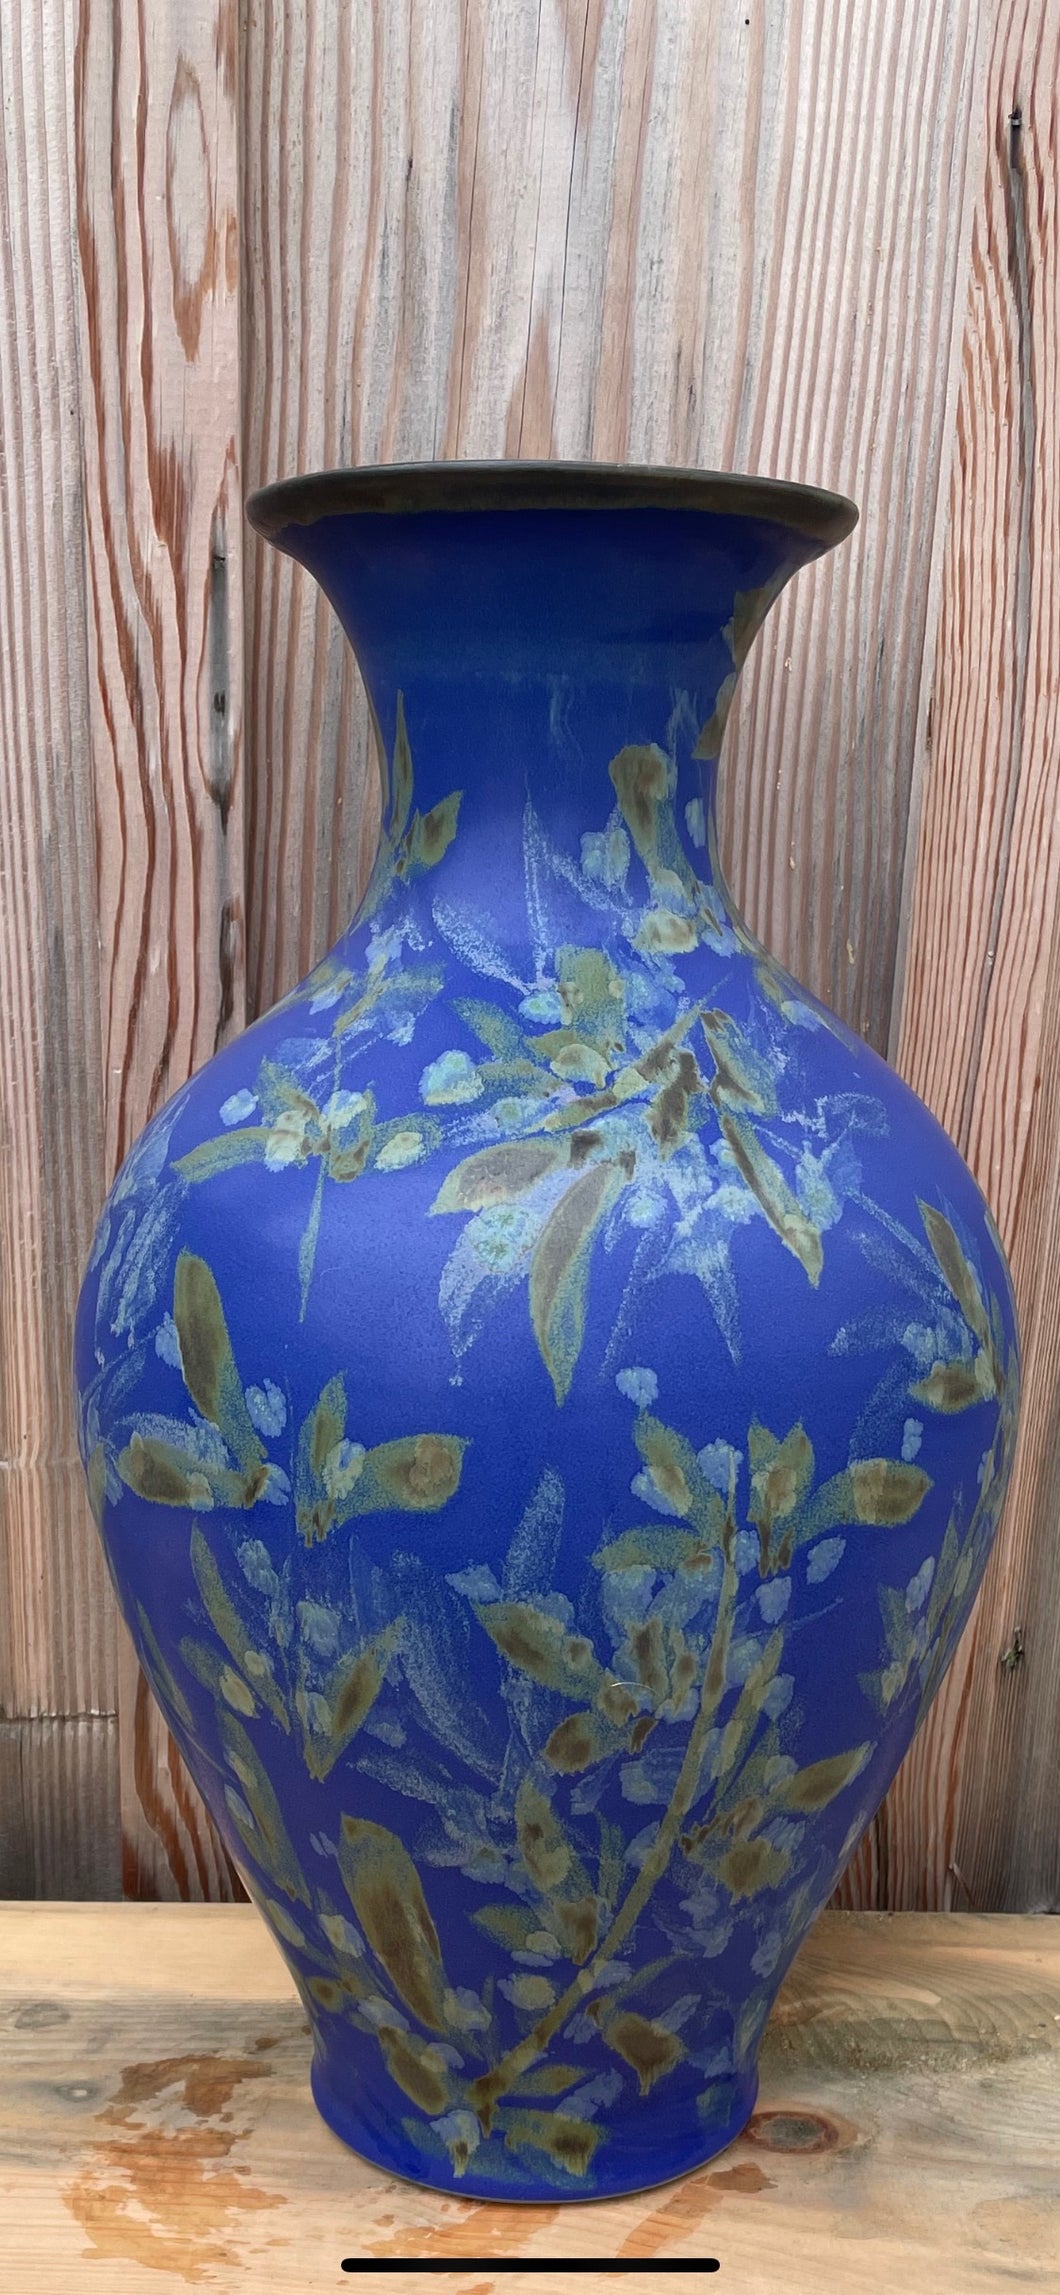 Tall floor vase